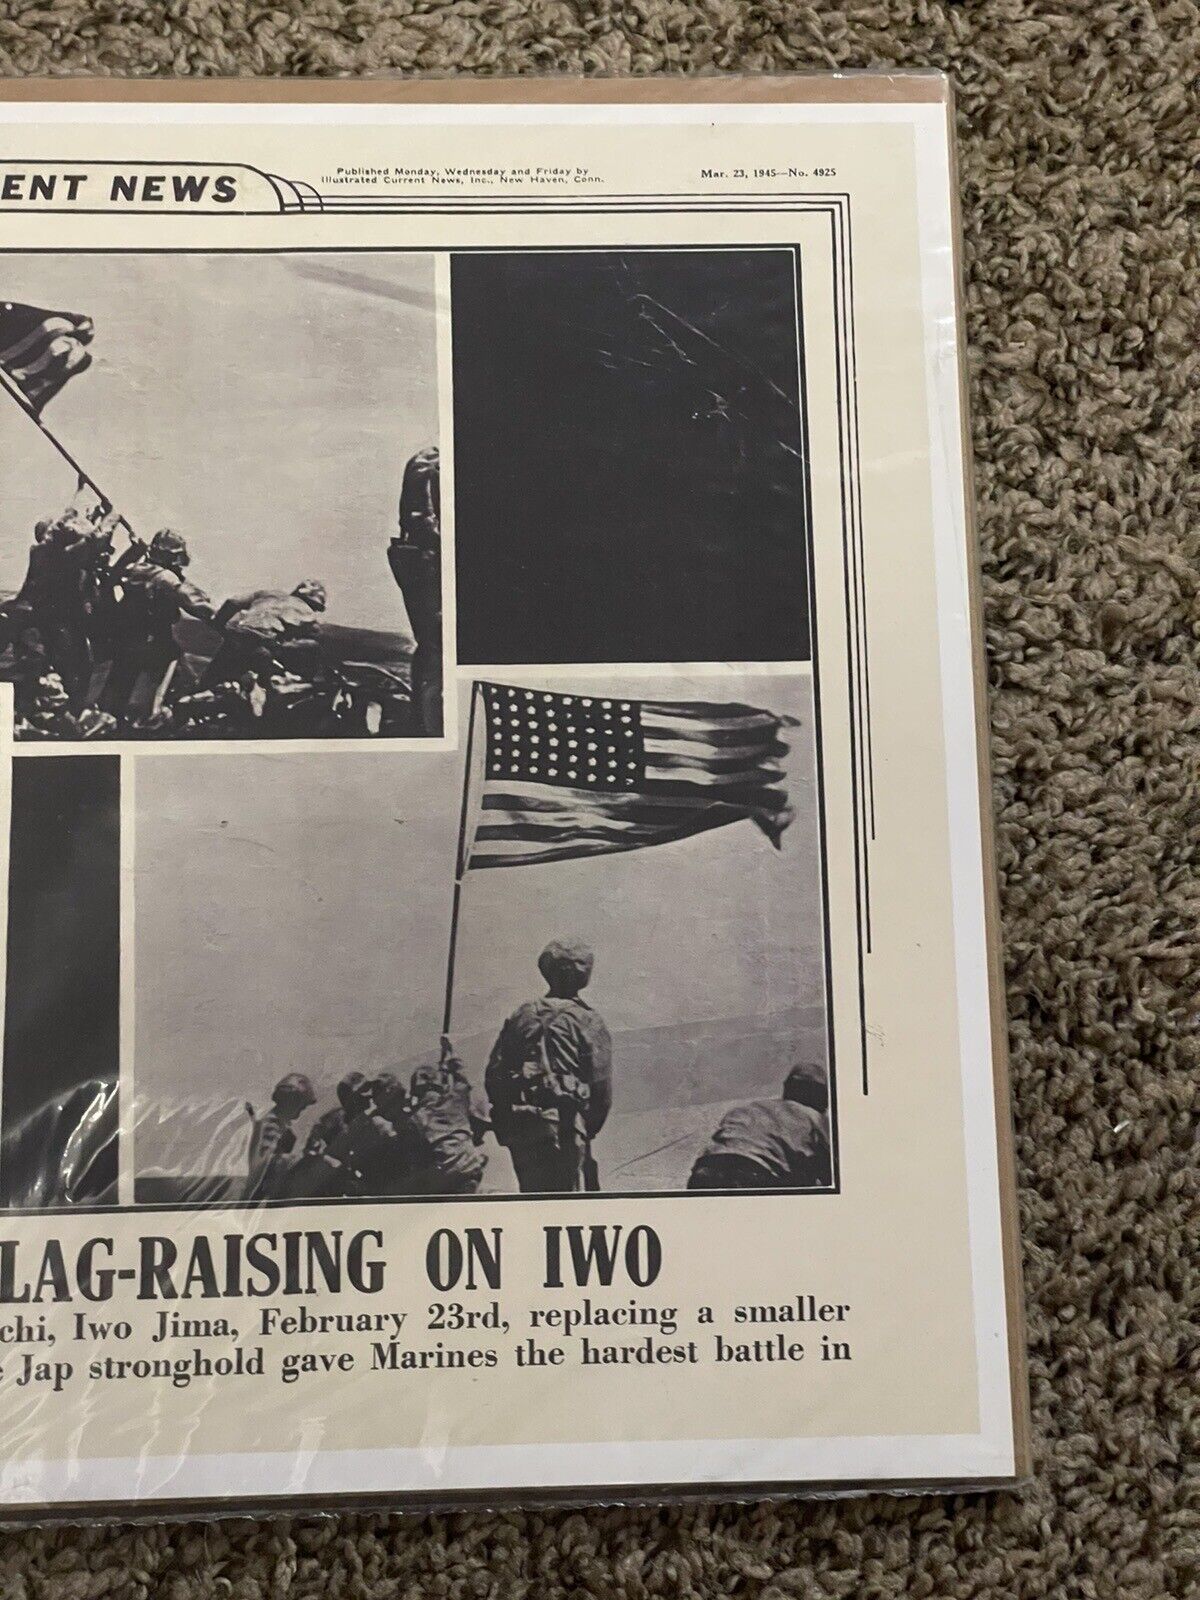 Illustrated Current News History Marine Flag Raising on IWO Jima Poster 1945 Без бренда - фотография #6